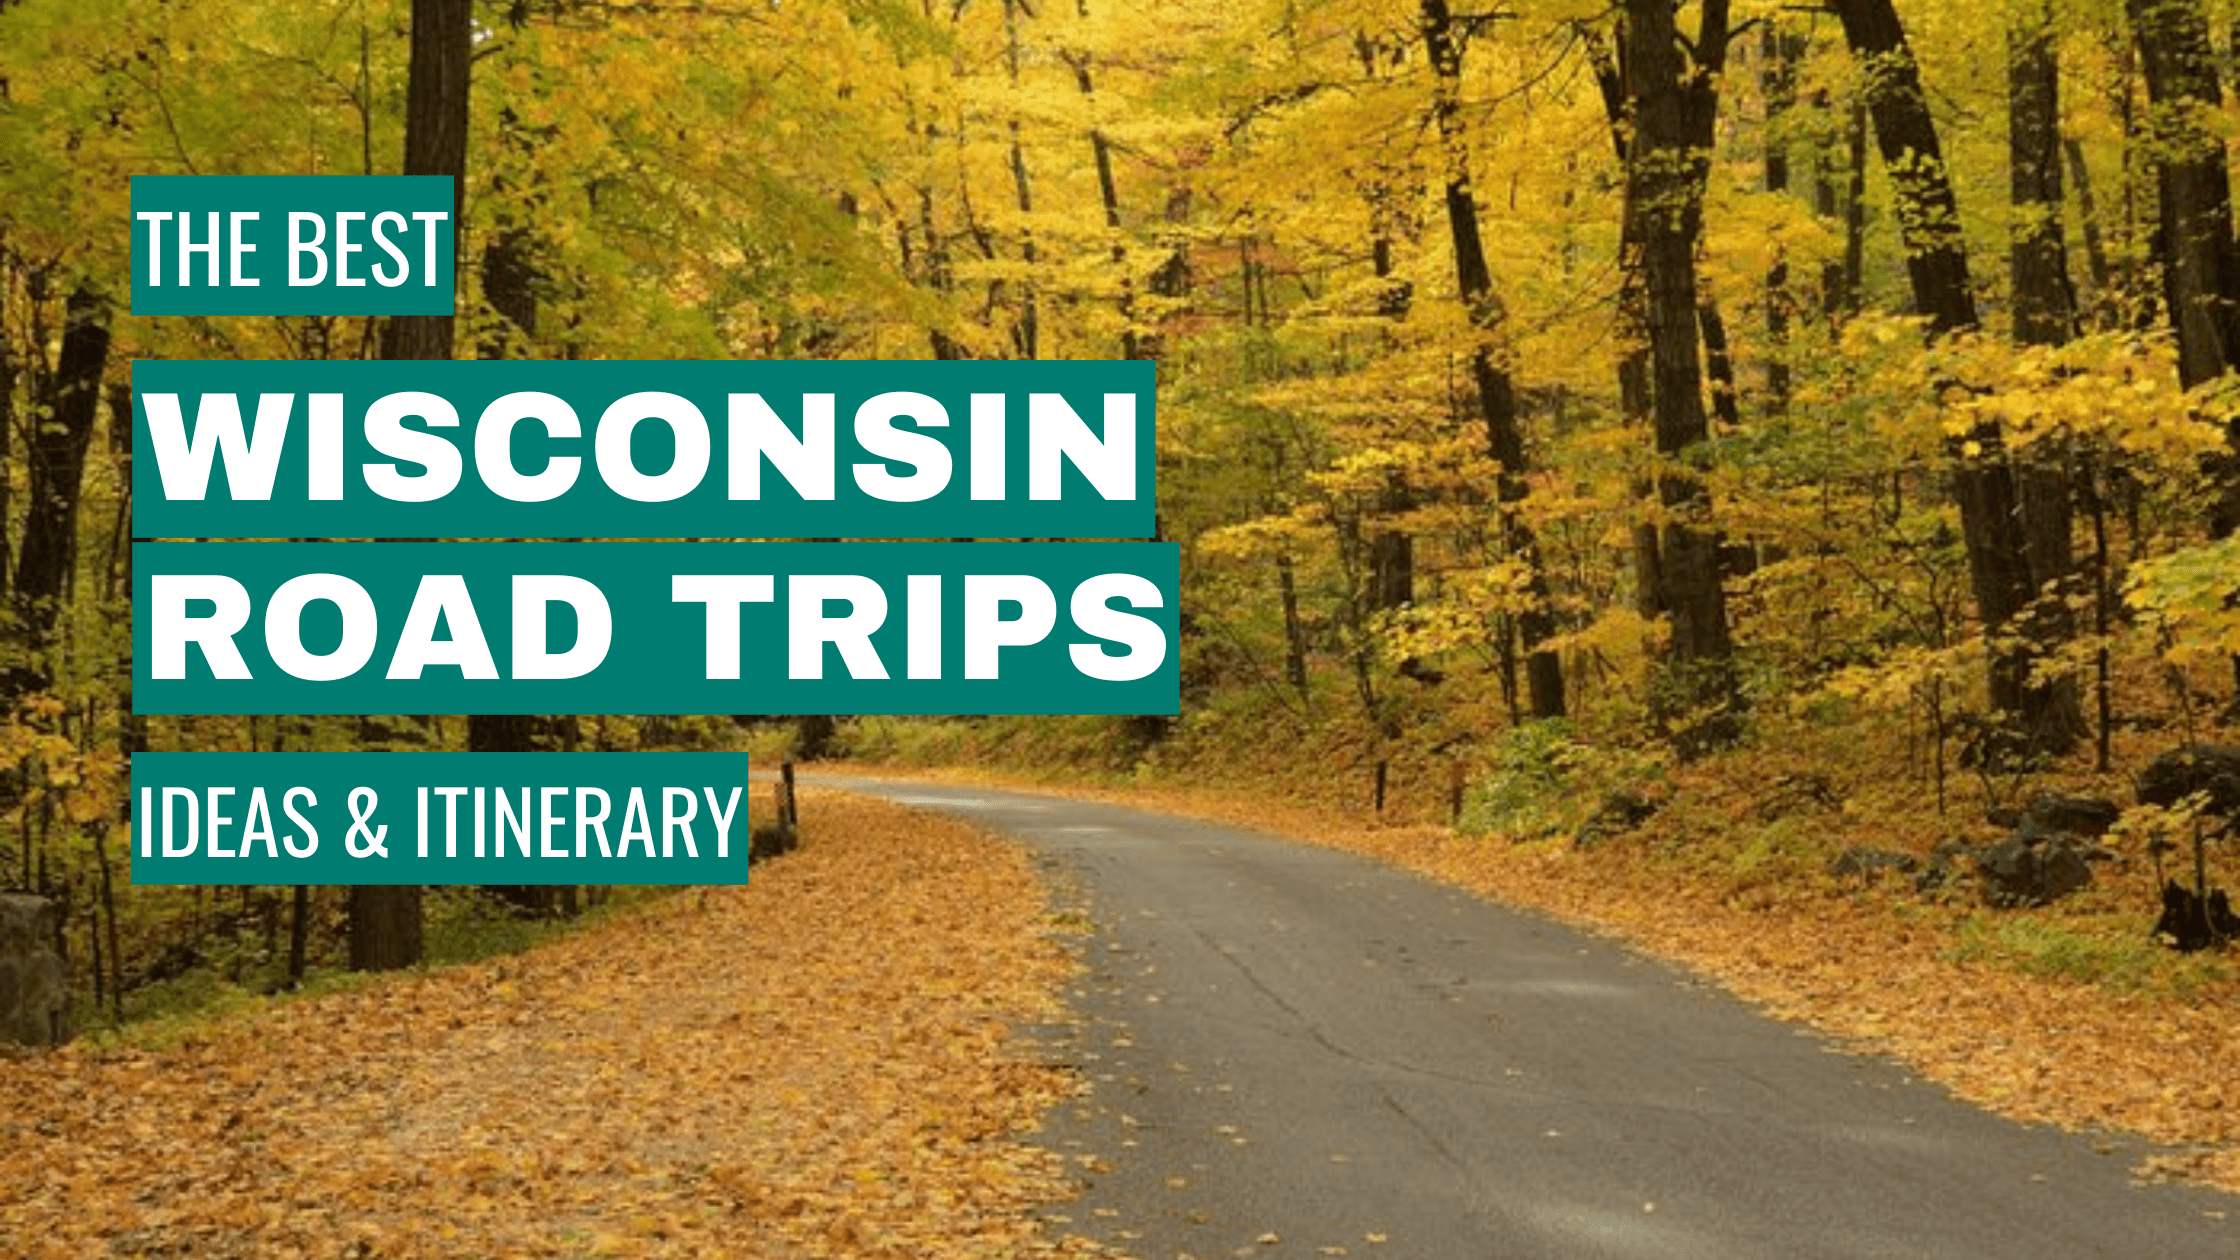 Wisconsin Road Trip Ideas: 11 Best Road Trips + Itinerary